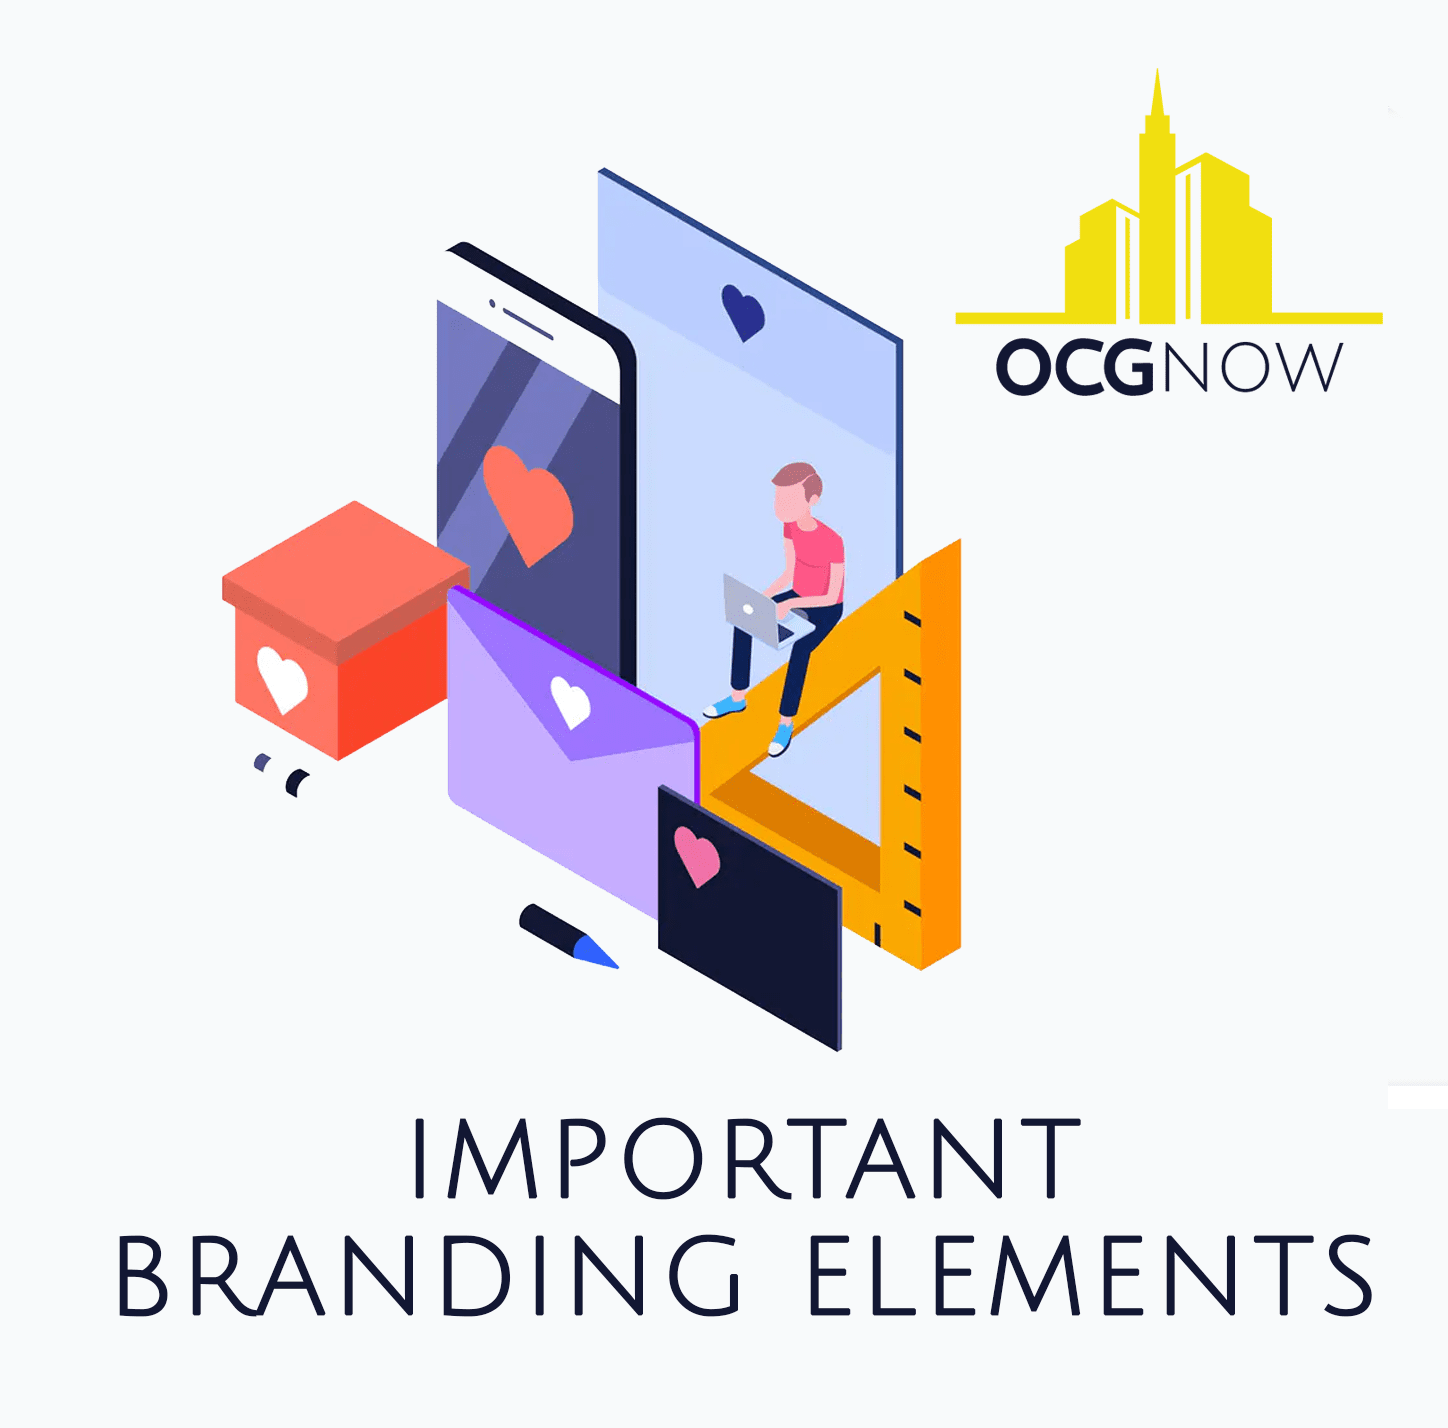 Graphic of branding elements depicting digital marketing branding strategies